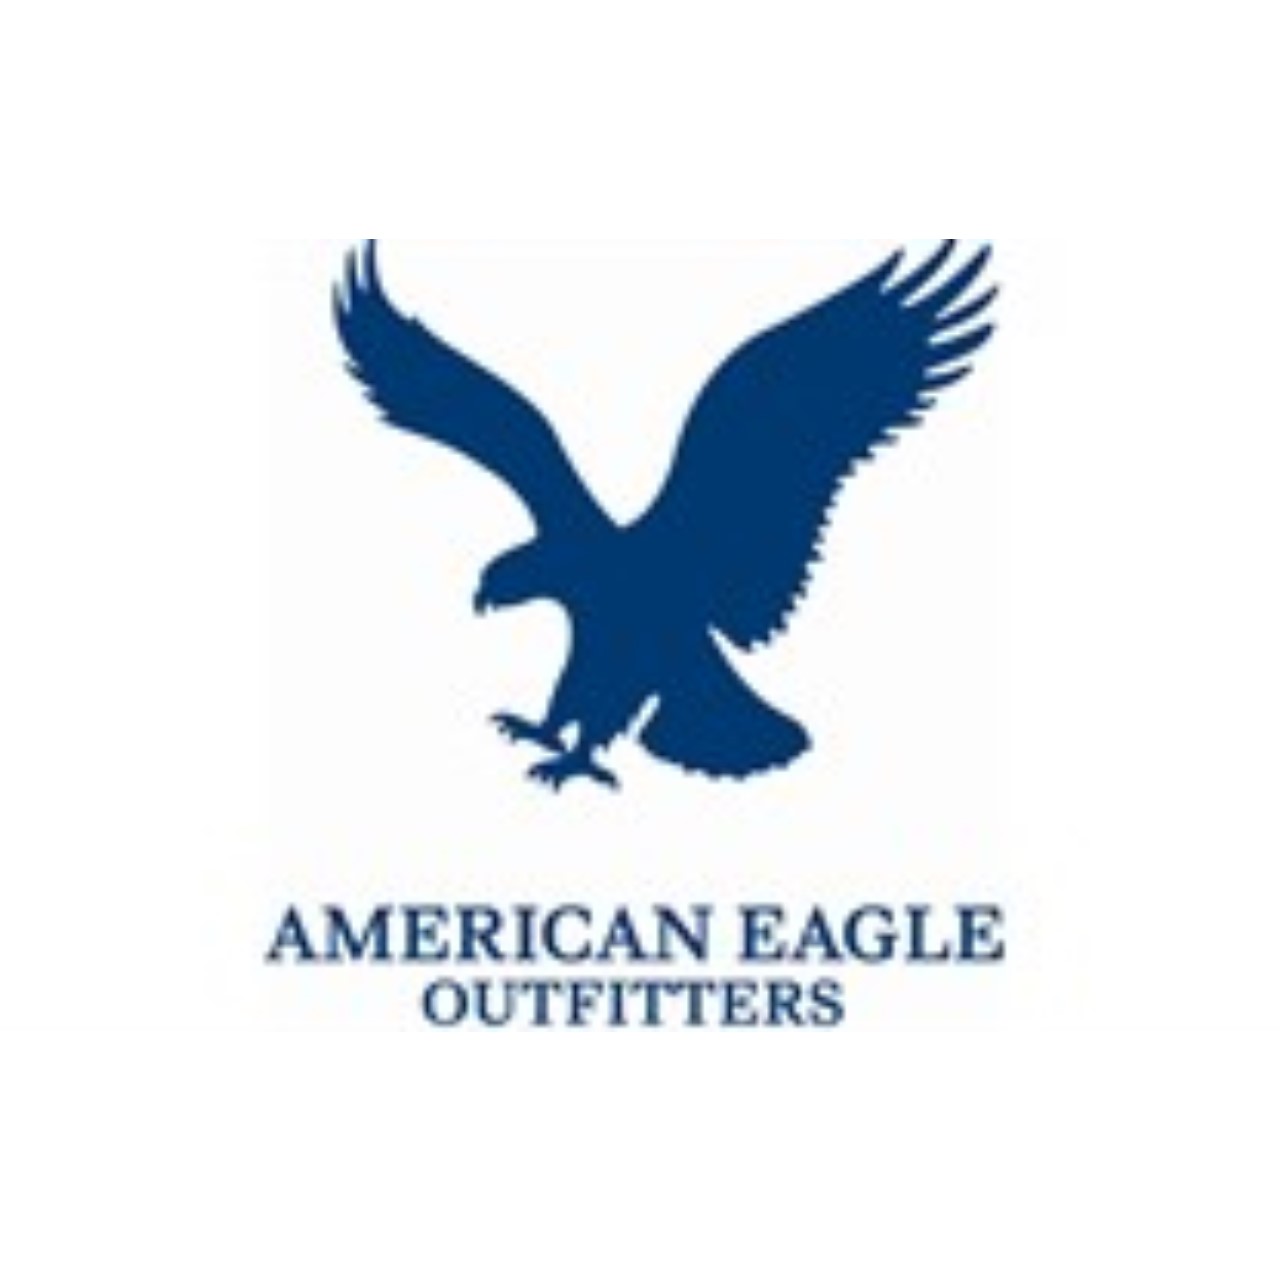 Американ игл. Американ игл логотип. American Eagle Outfitters Inc лого. Outfitters одежда логотип. Надпись American Eagle.